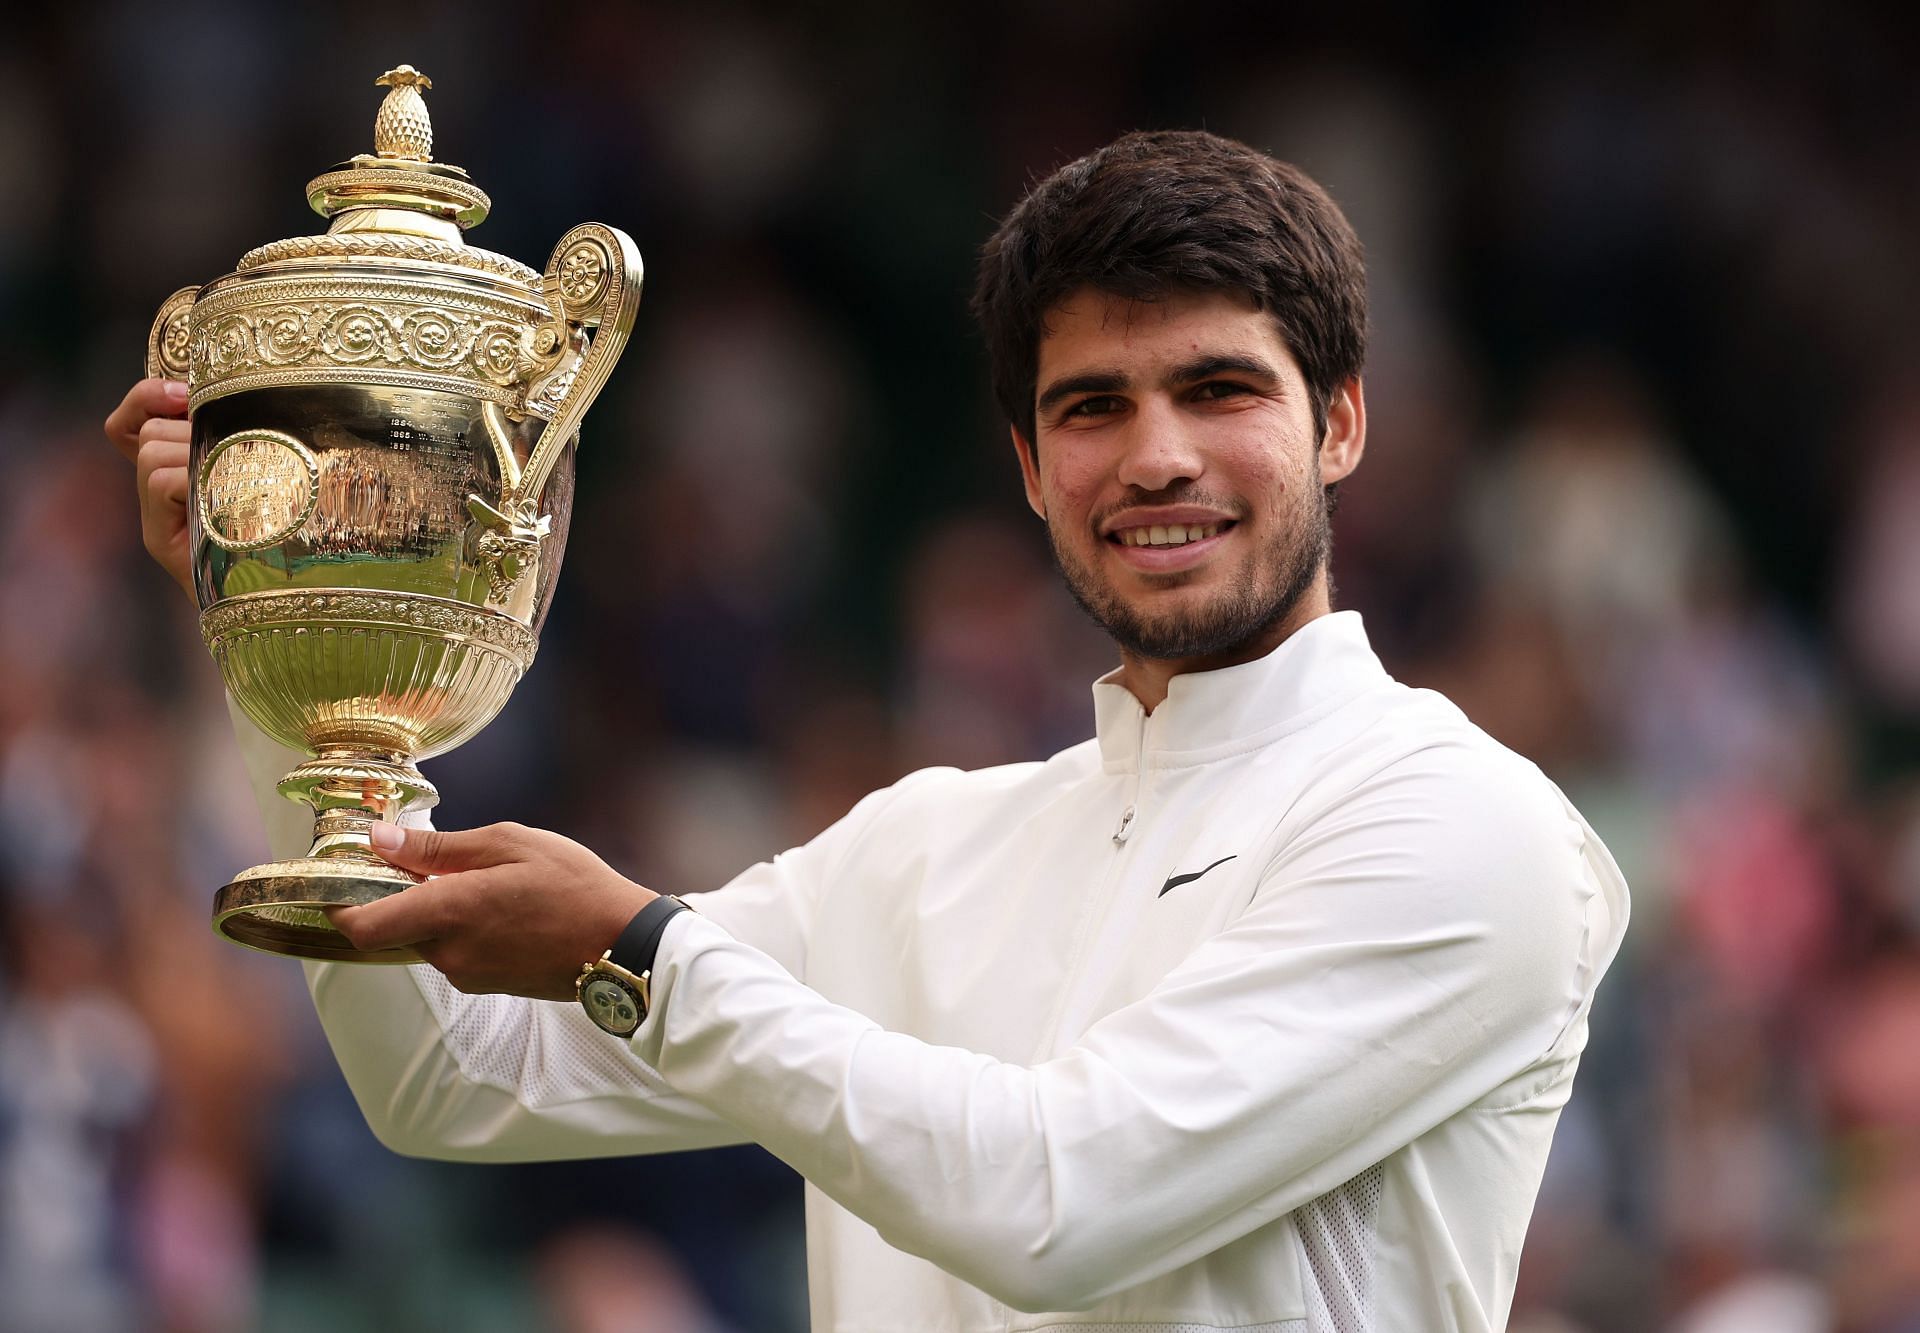 Carlos Alcaraz wins the Wimbledon 2023 title